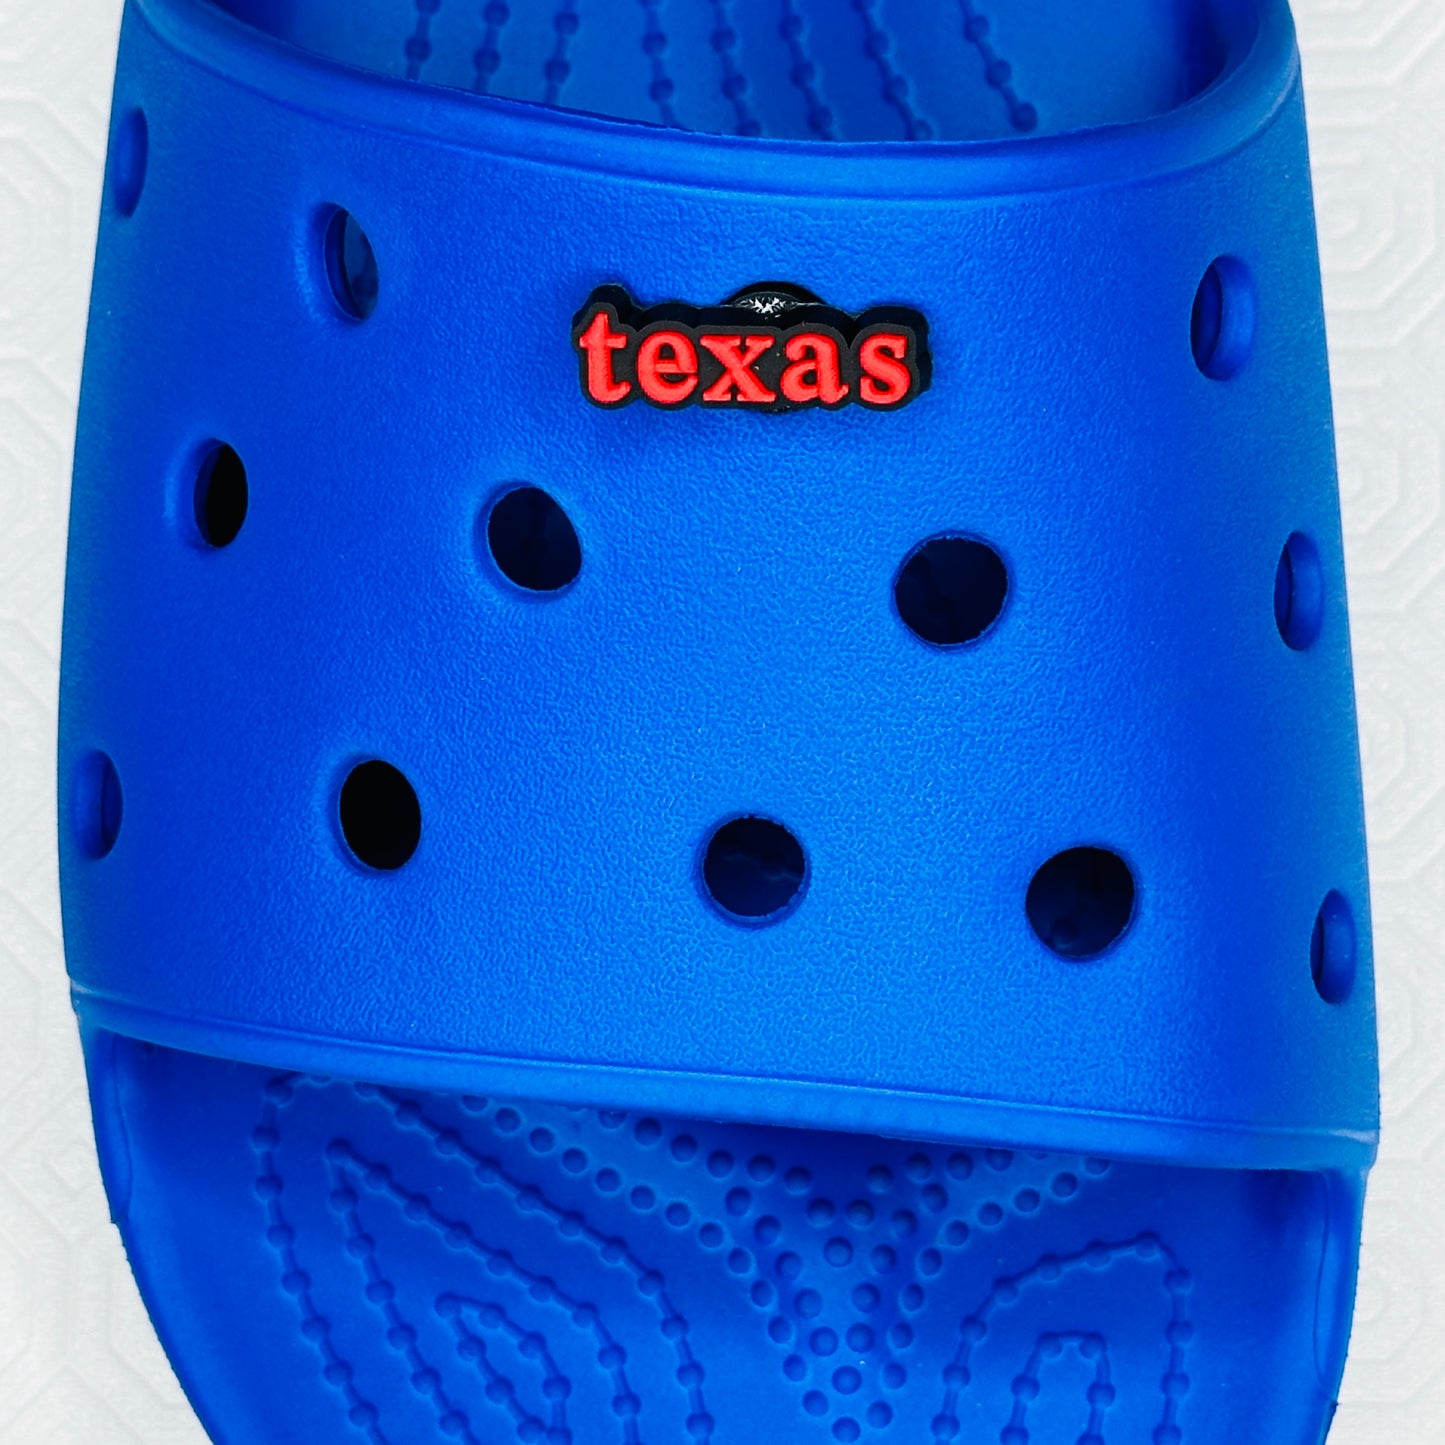 Texas Proud Croc Charm